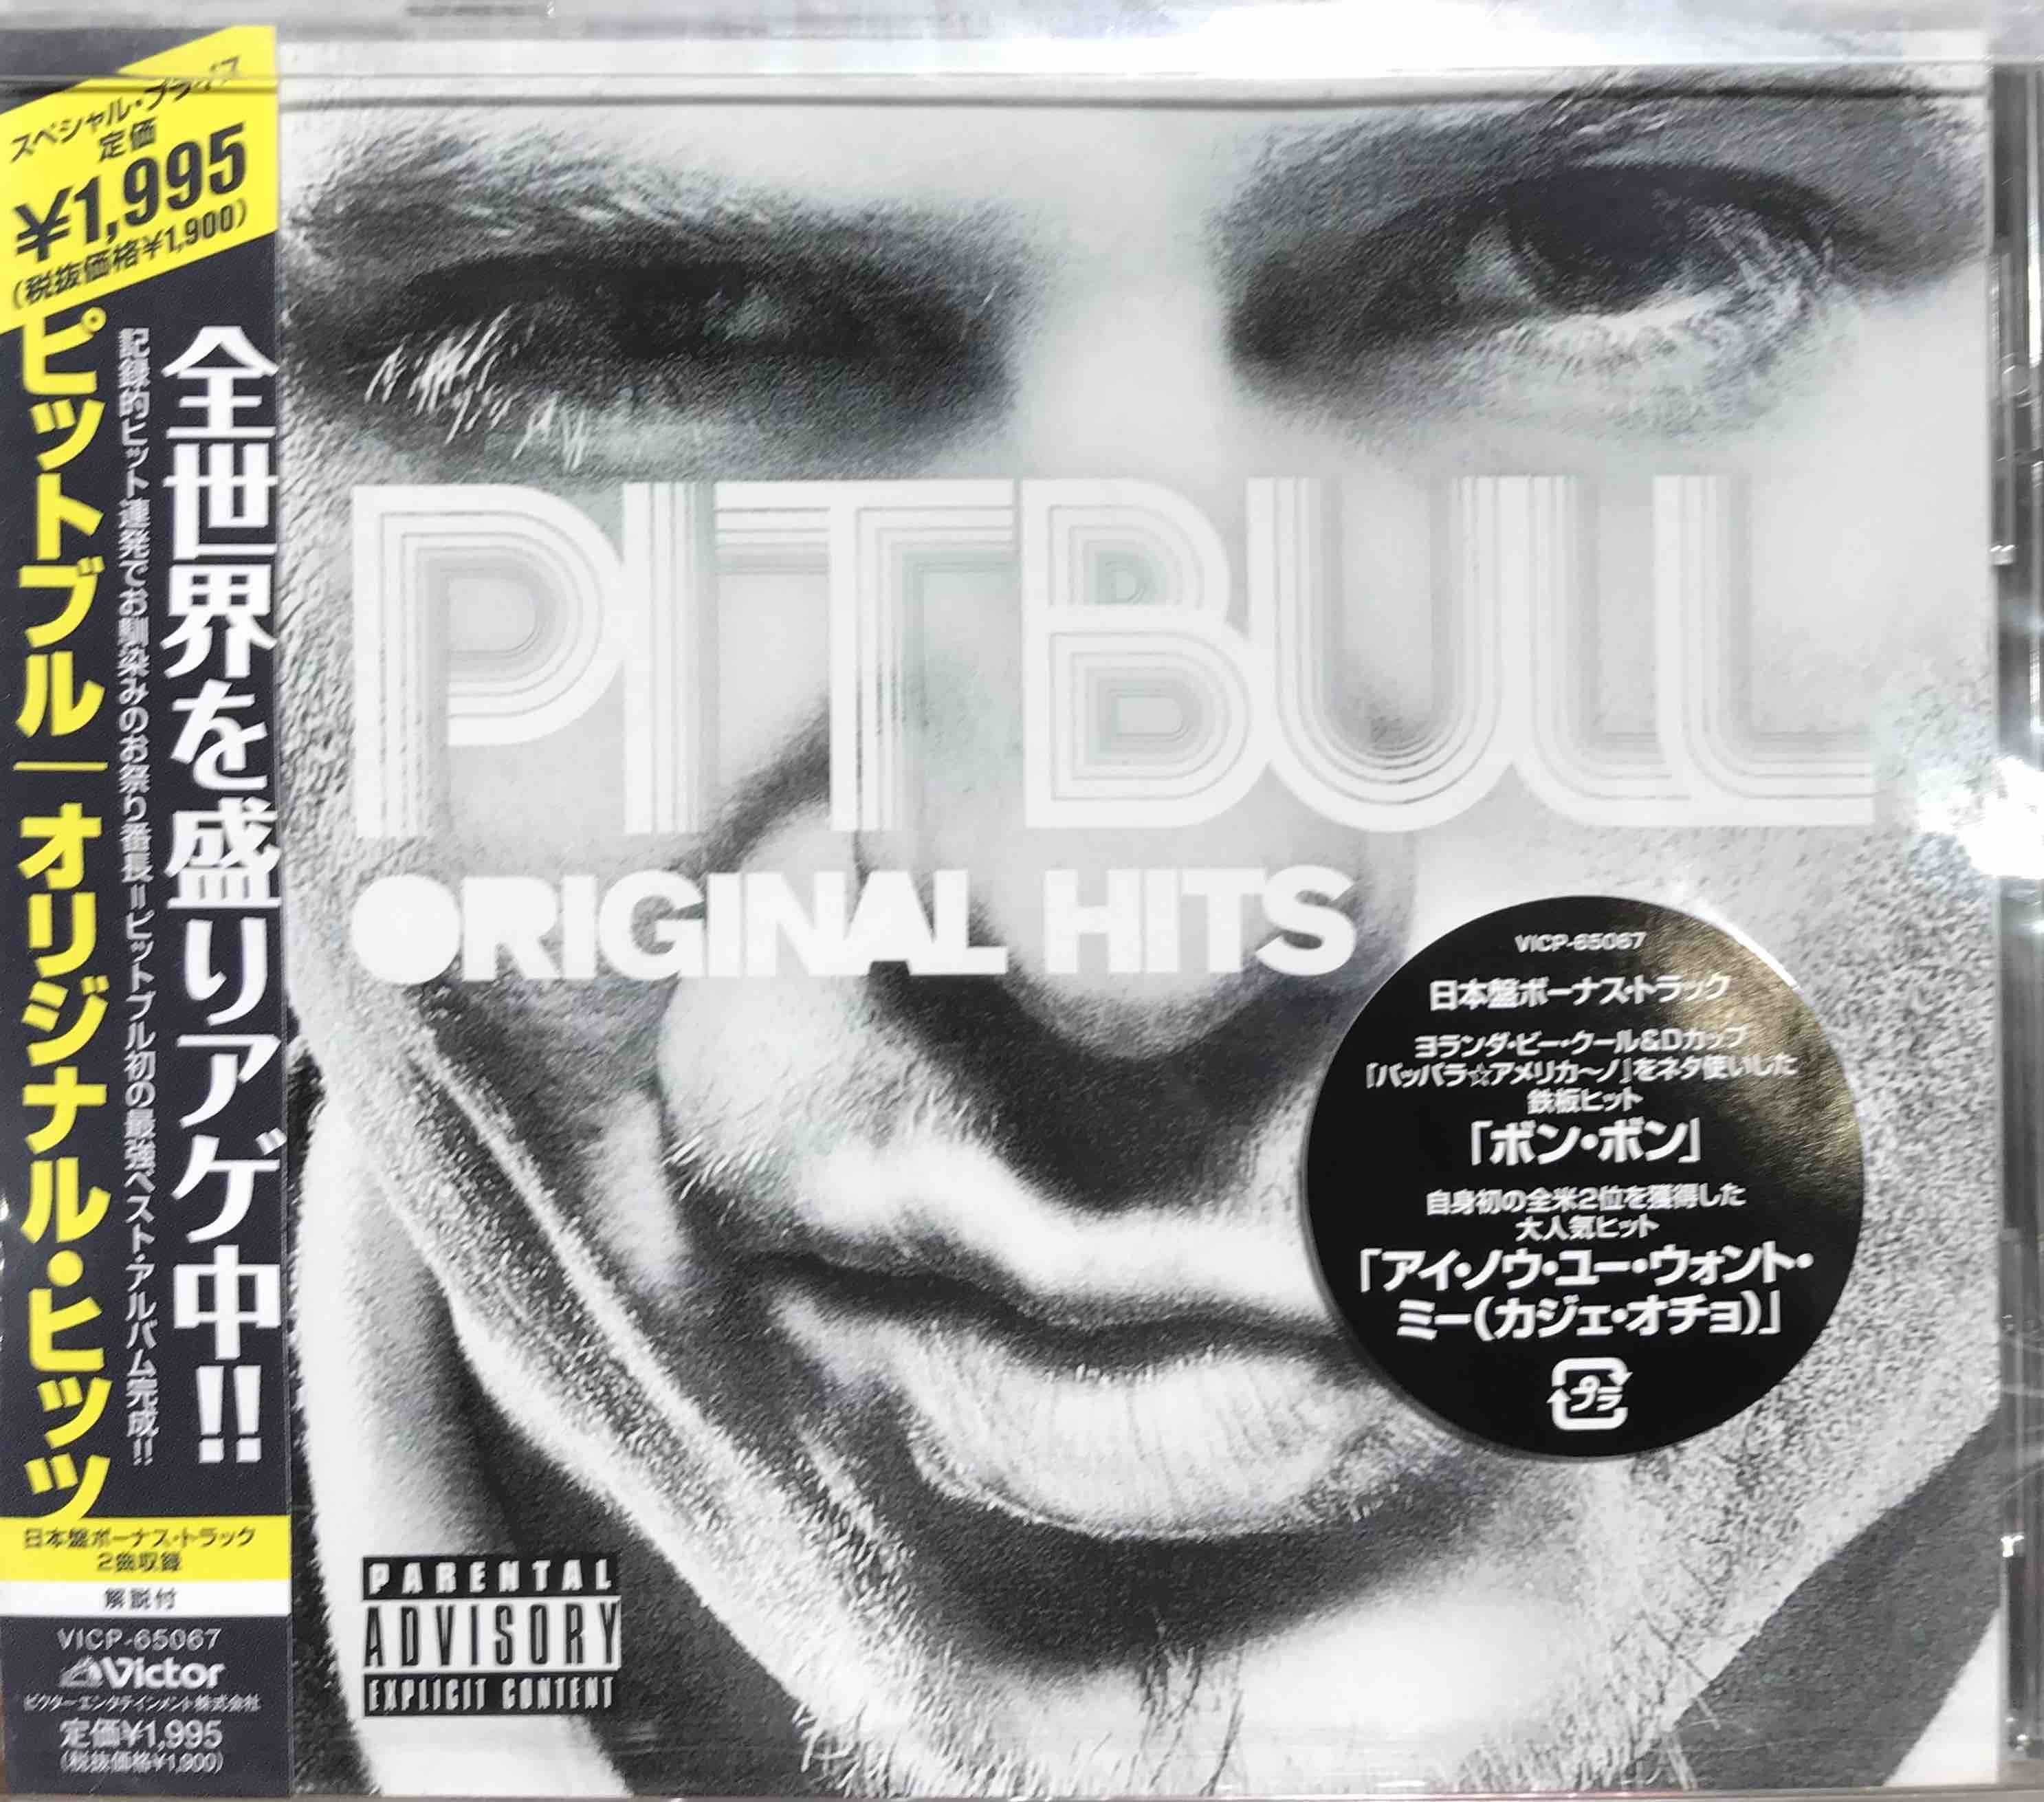 Pitbull ‎– Original Hits